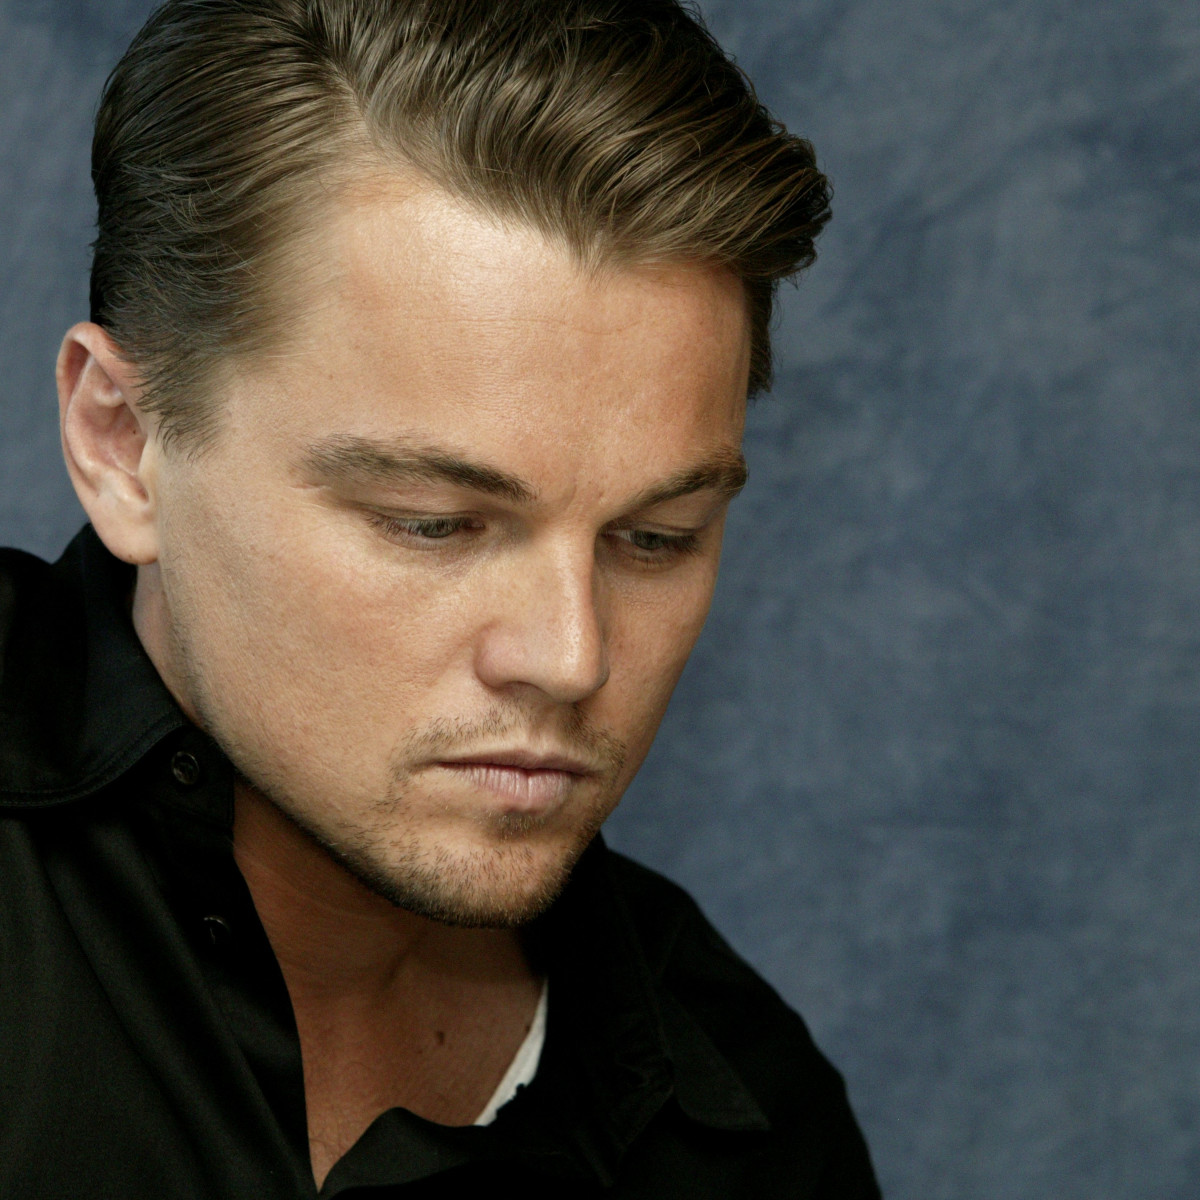 Leonardo DiCaprio photo 185 of 1142 pics, wallpaper - photo #343357 ...